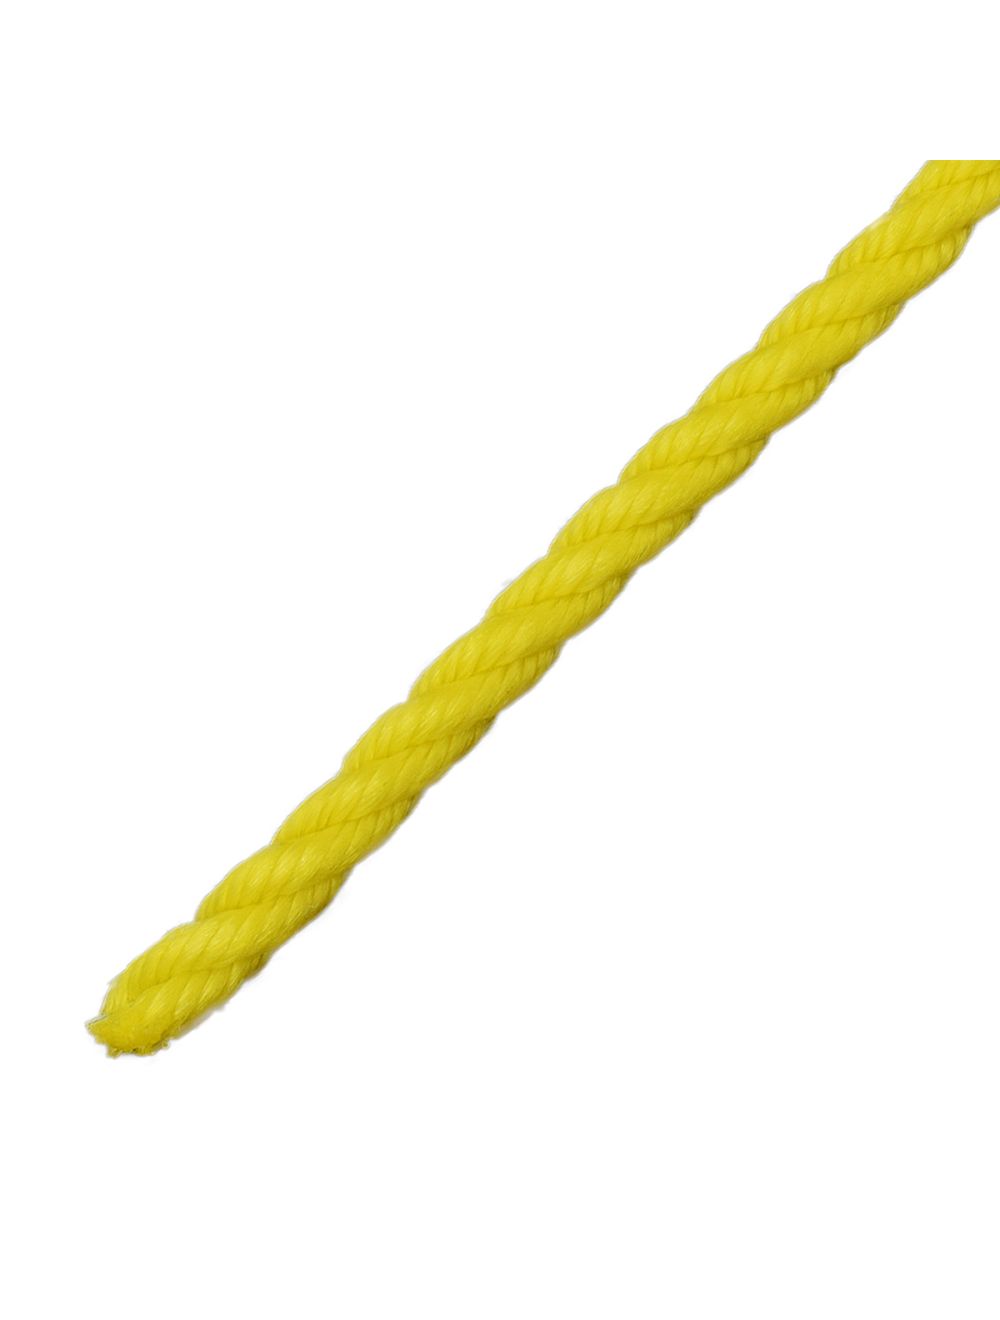 5/16 x 100' 3-Strand Twisted Yellow Monofilament Polypropylene Rope